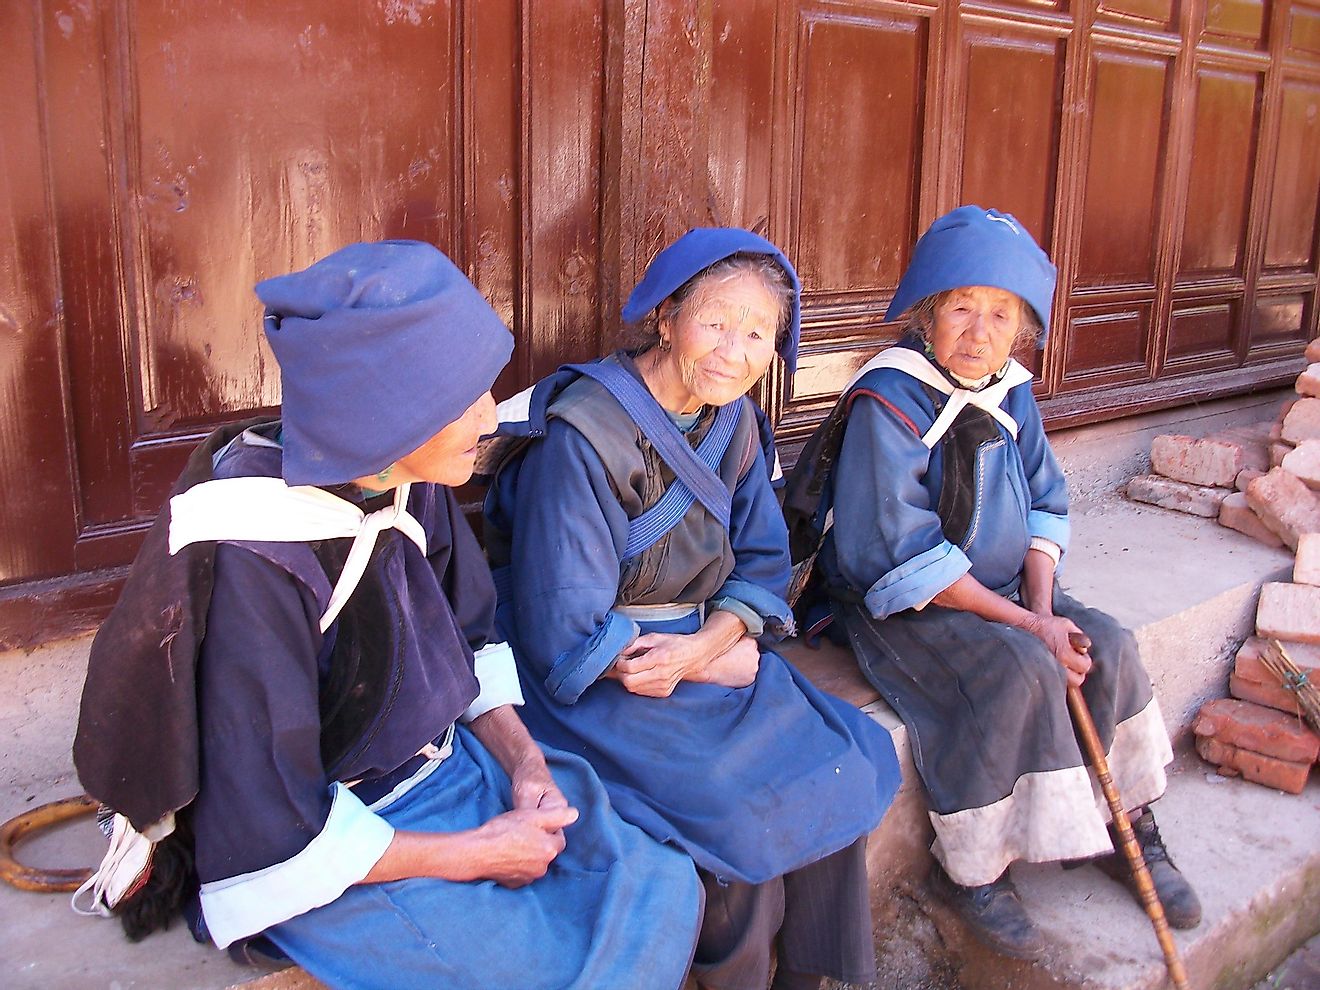 Mosuo women, China. Image credit: Alexander P Bell/Shutterstock